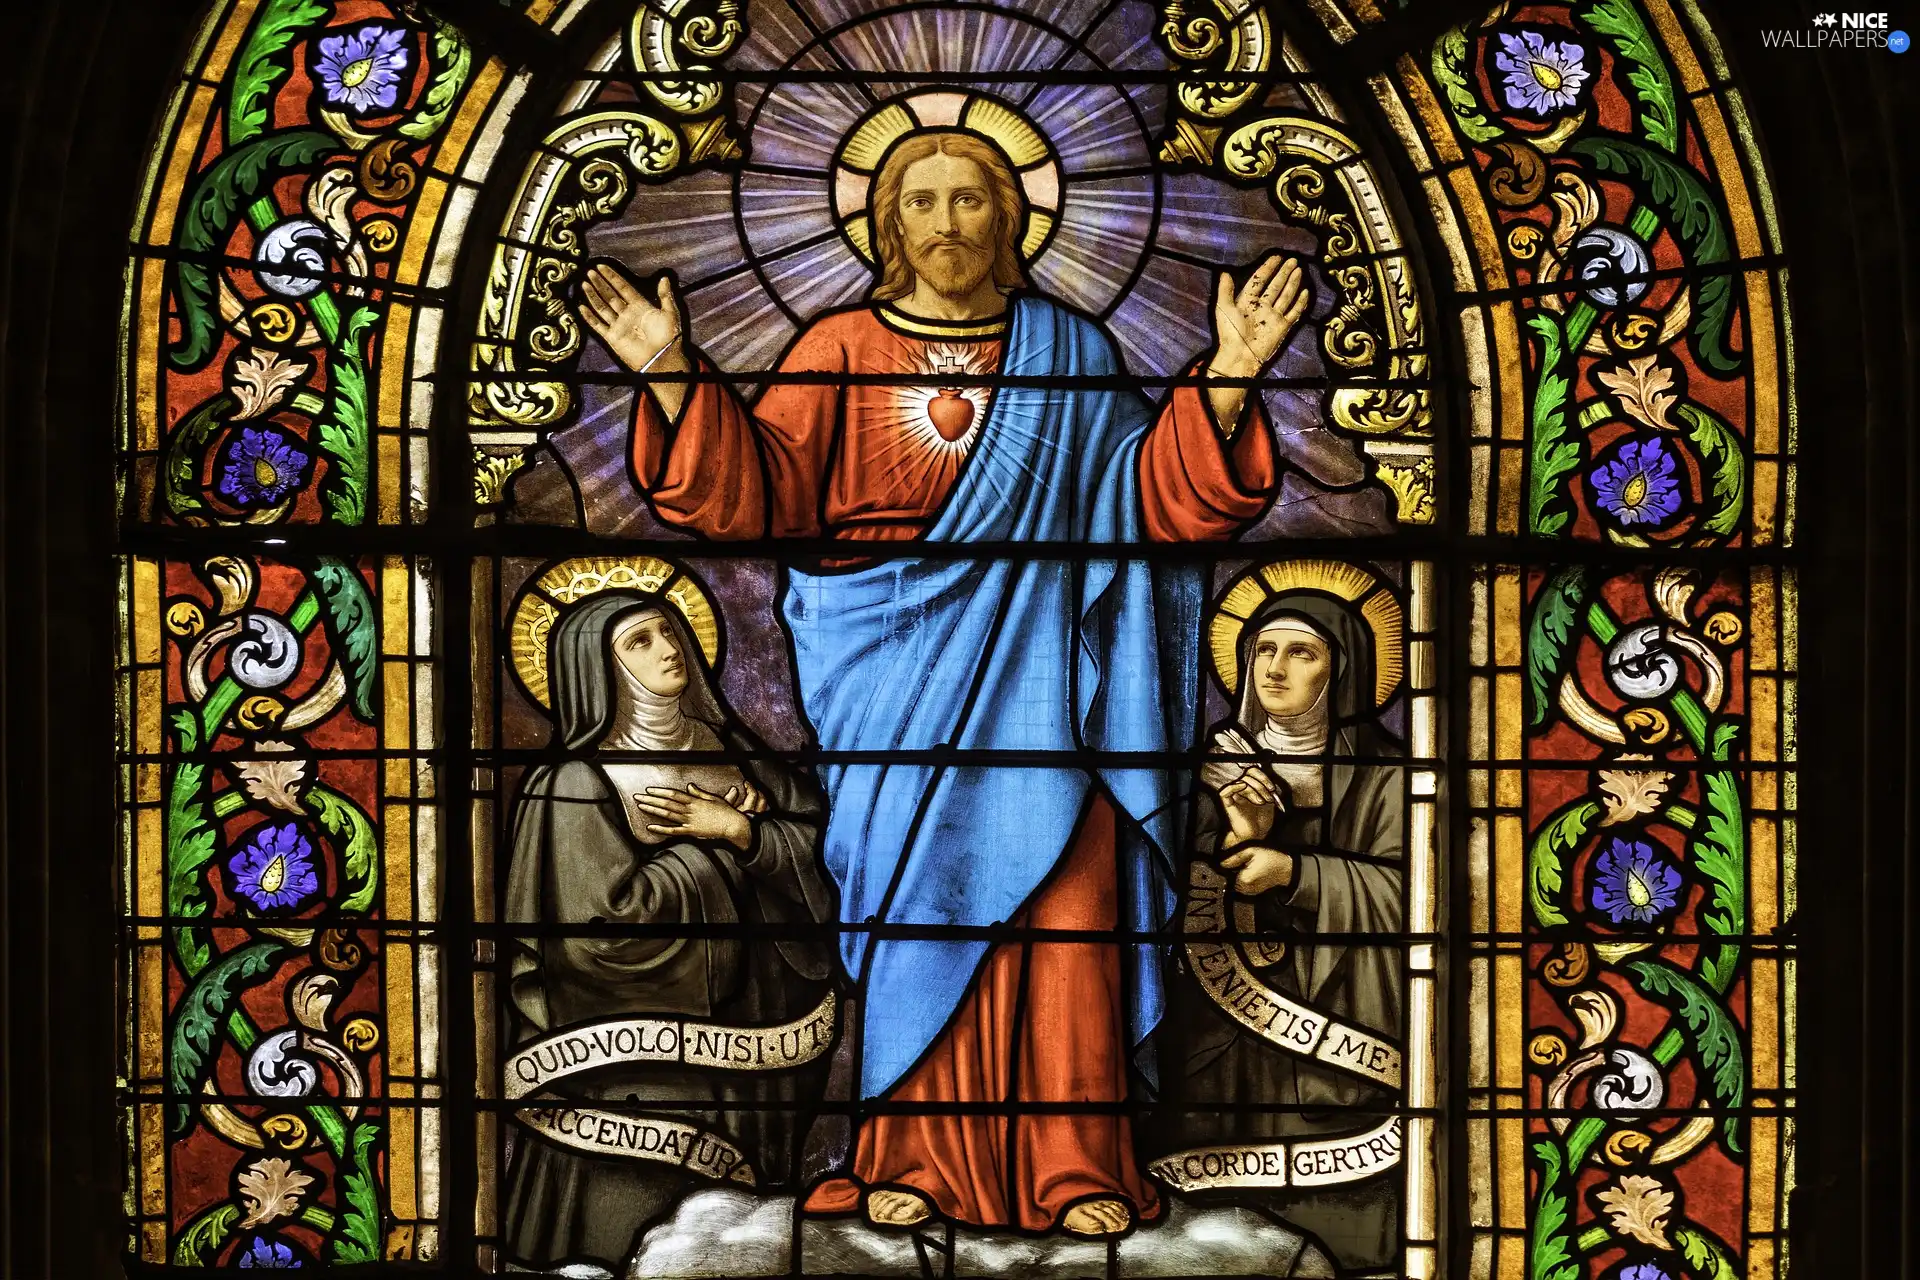 stained glass, Religion, Jesus Christ, Window